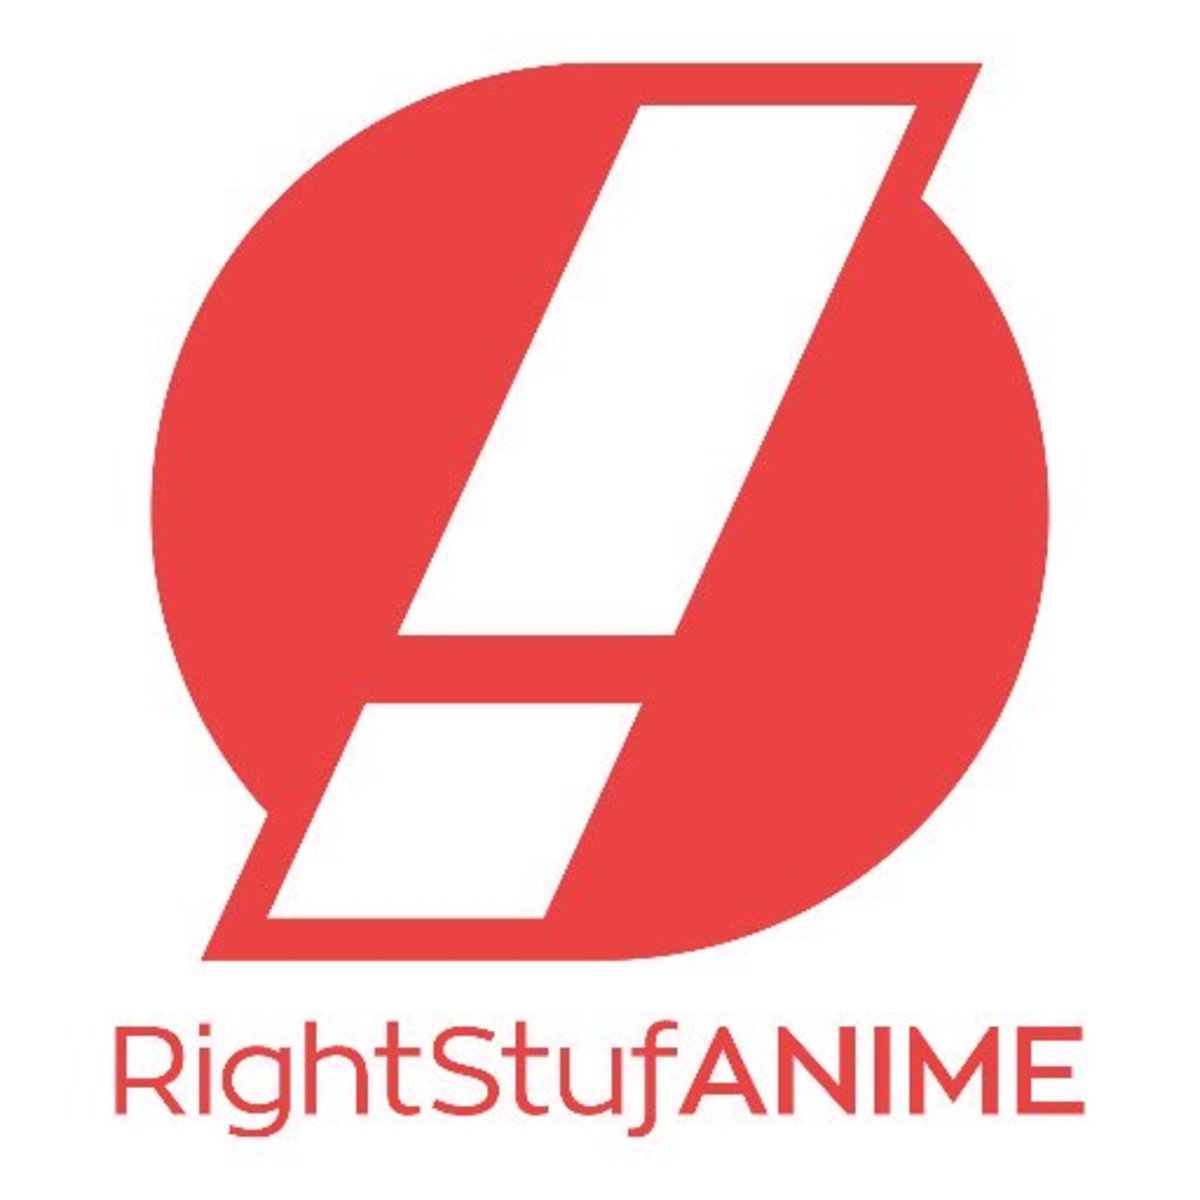 Website Review: RightStufAnime.com